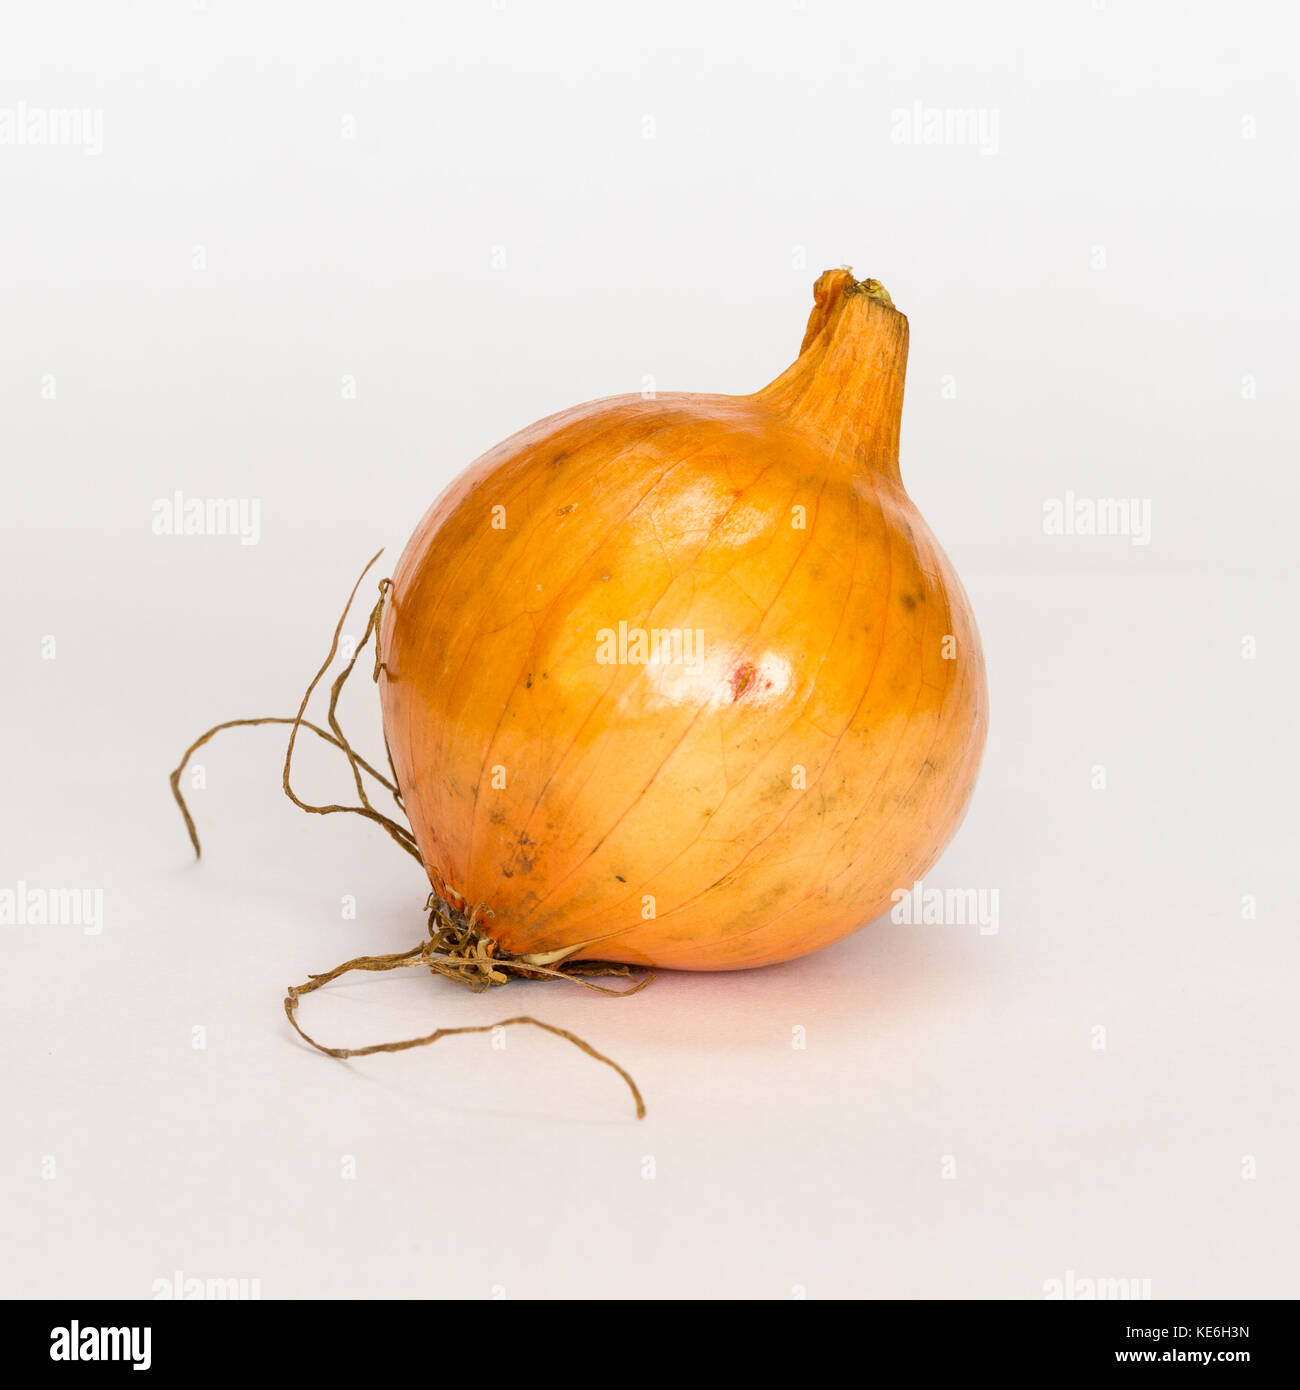 White onion close up Stock Photo